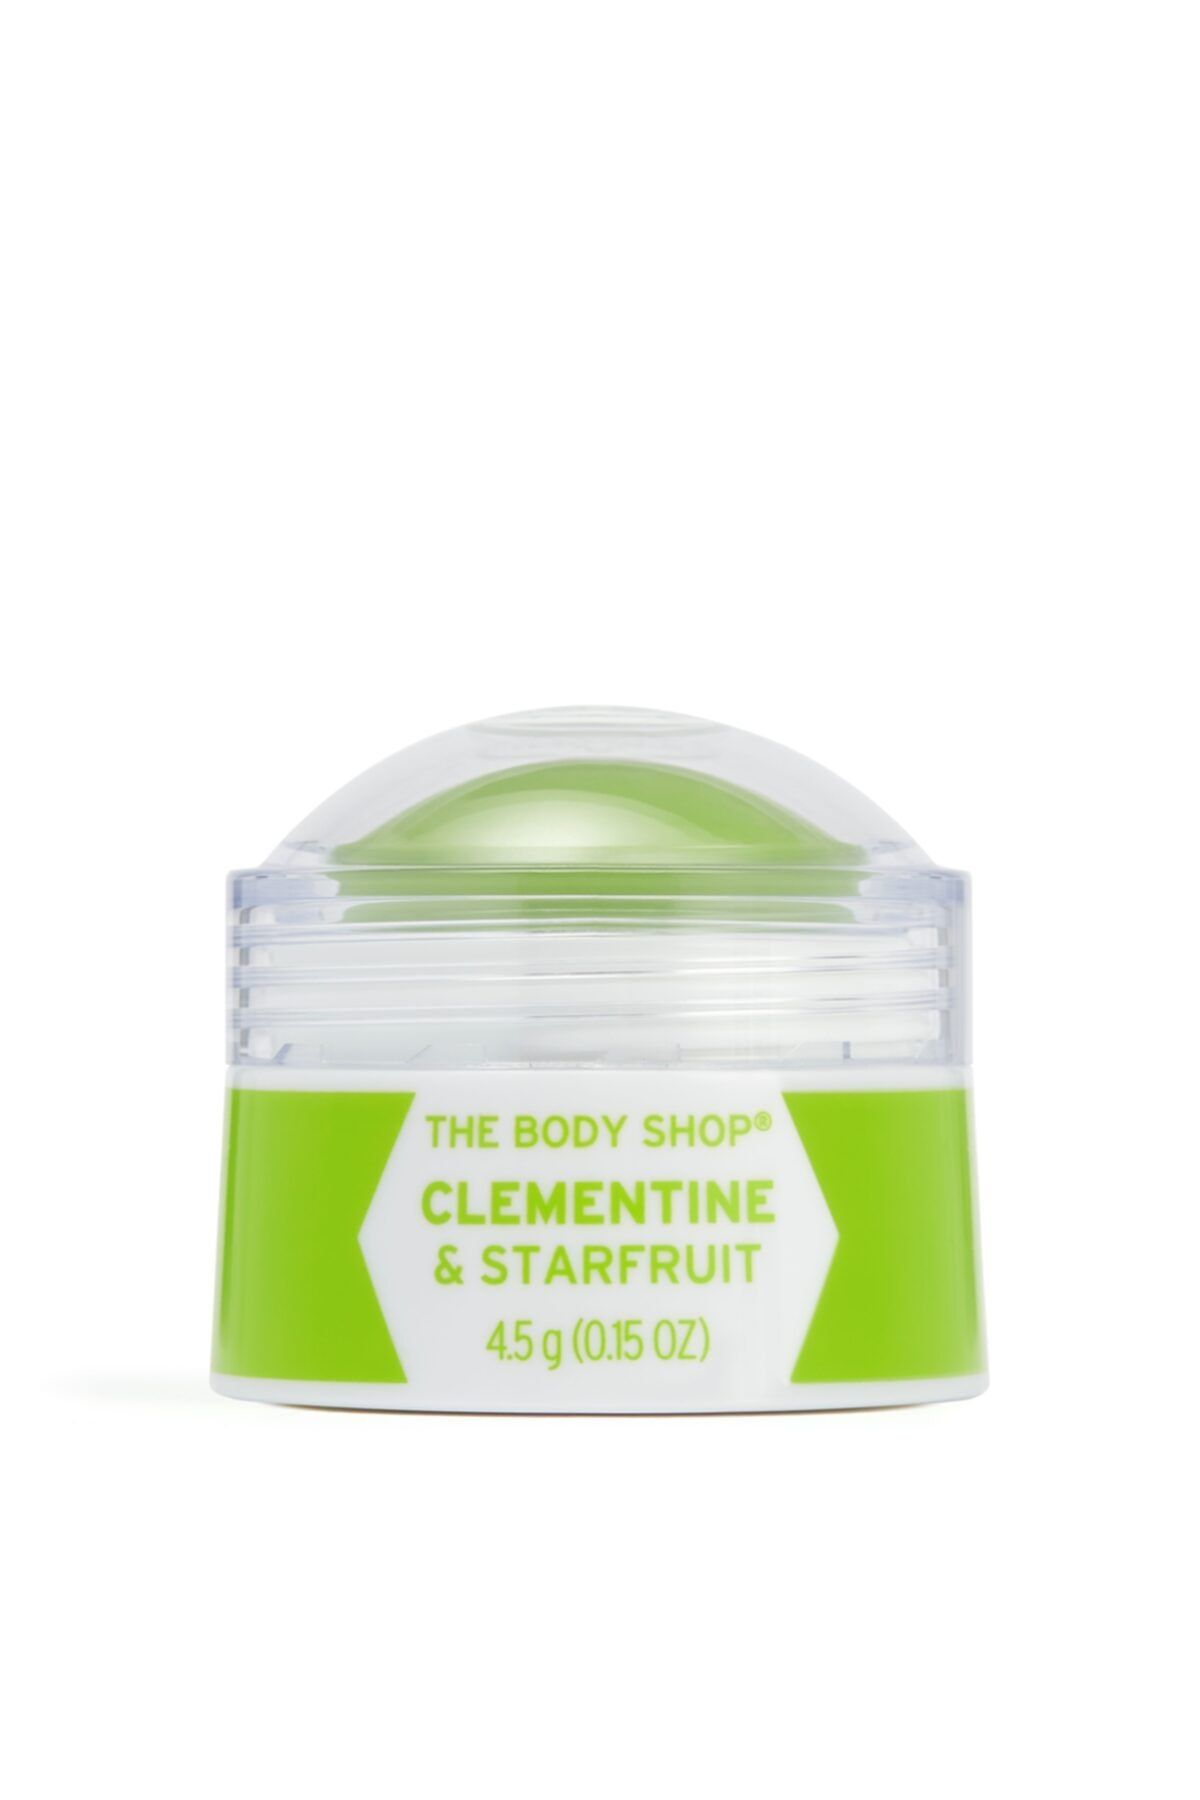 THE BODY SHOP Clementine ve Starfruit Katı Parfüm 4,5 g